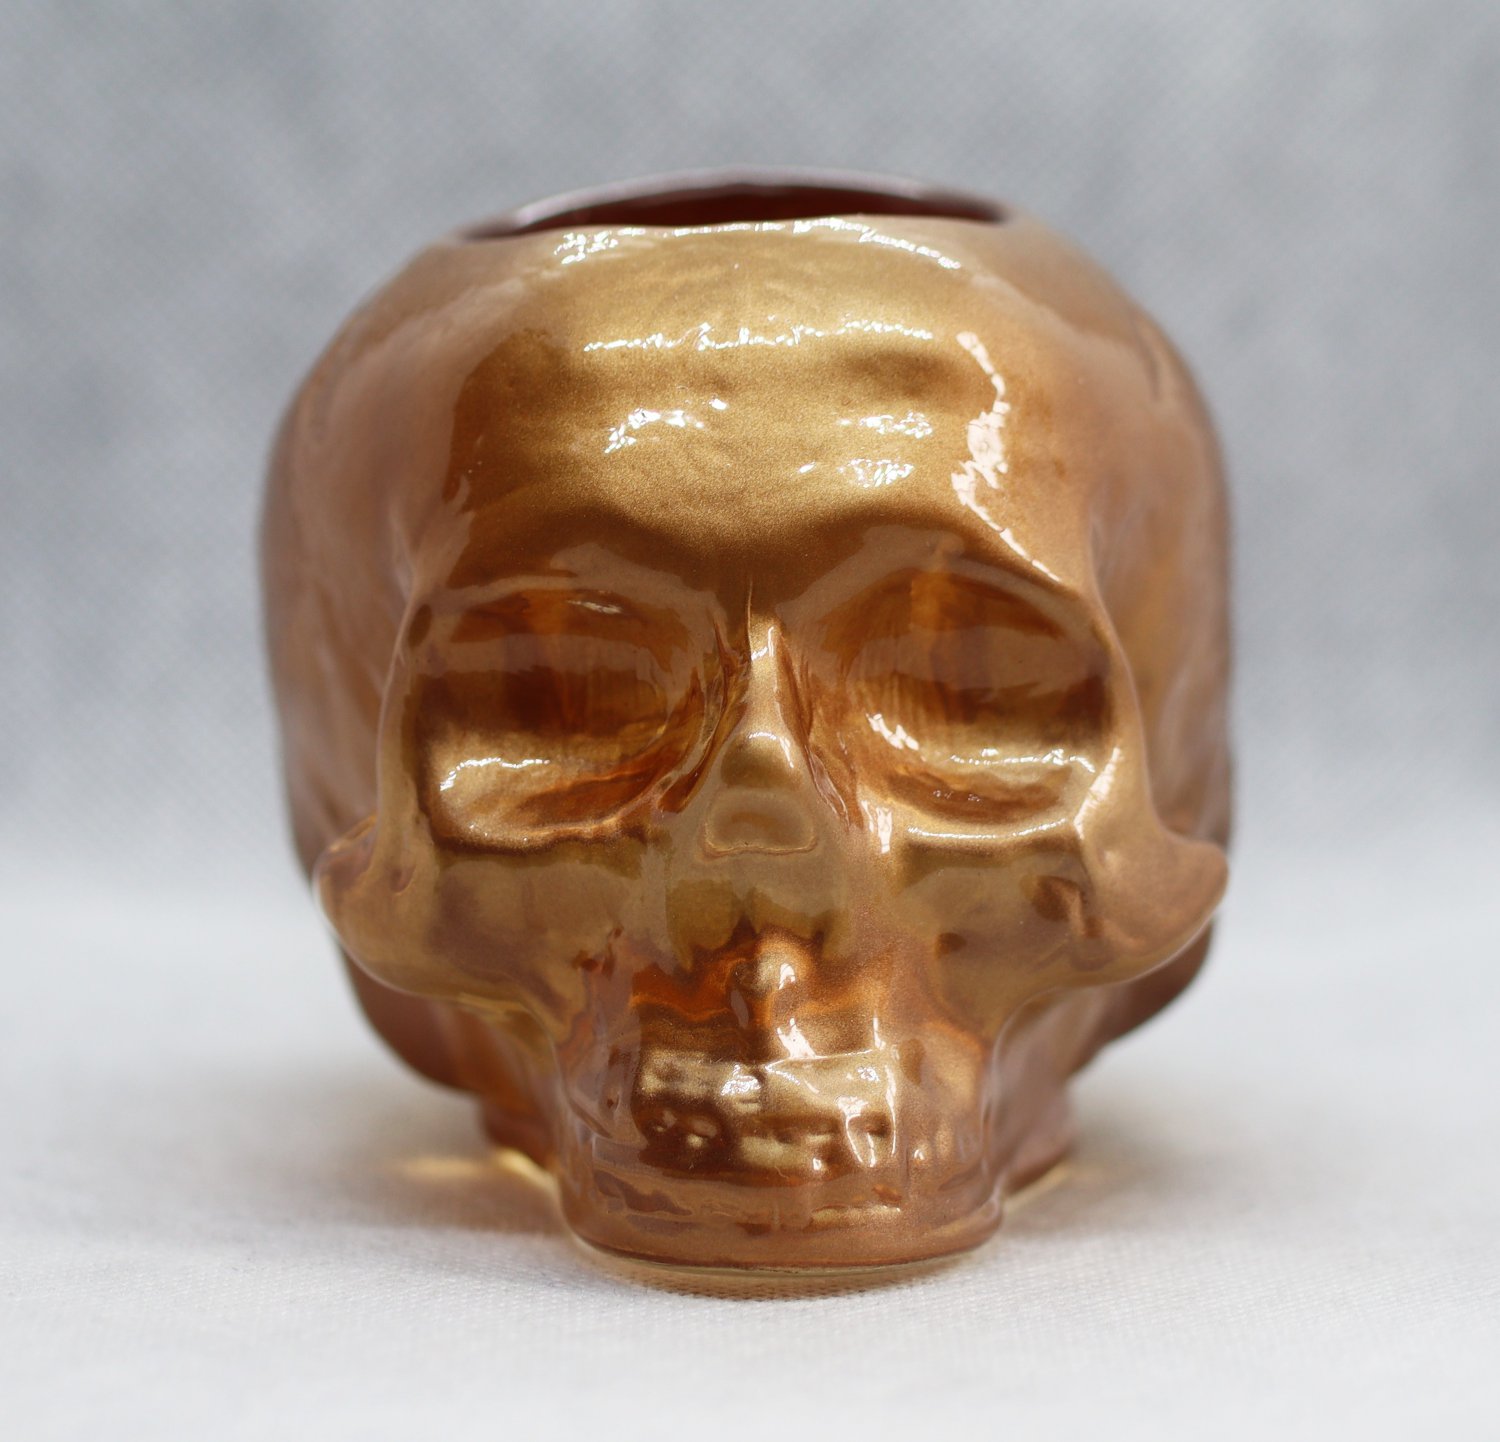 Kosta Boda Skull Copper Candle Holde Crystal Glass Swedish Scandinavian Design